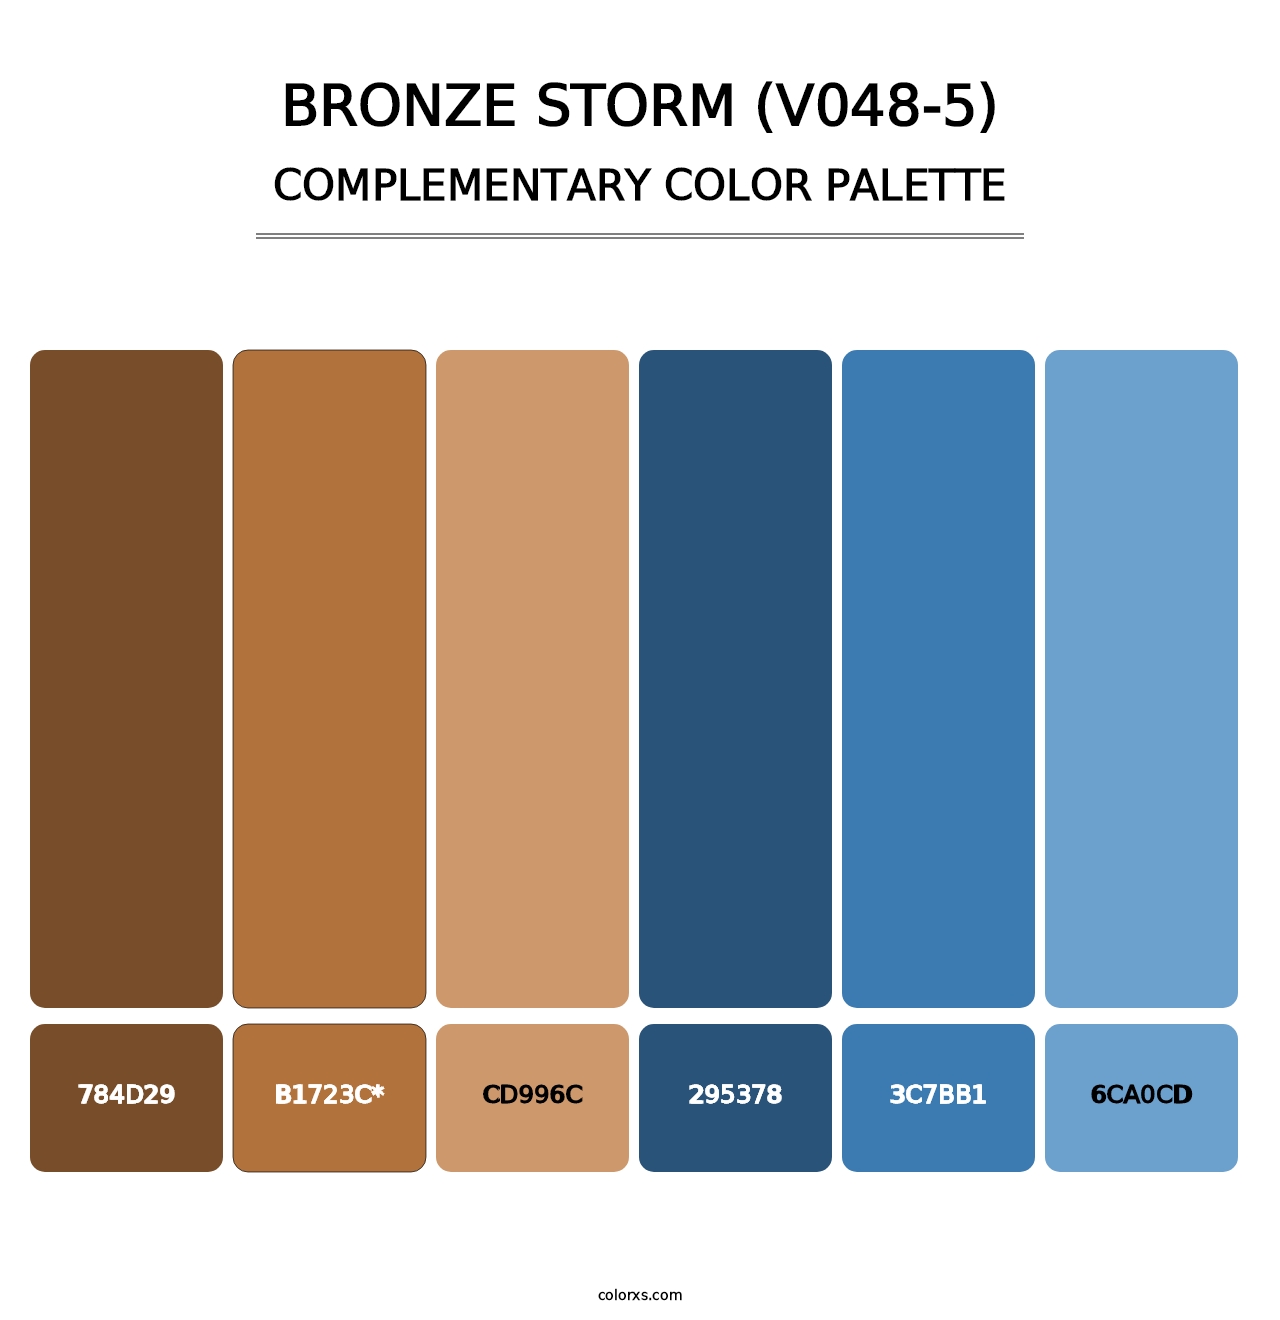 Bronze Storm (V048-5) - Complementary Color Palette